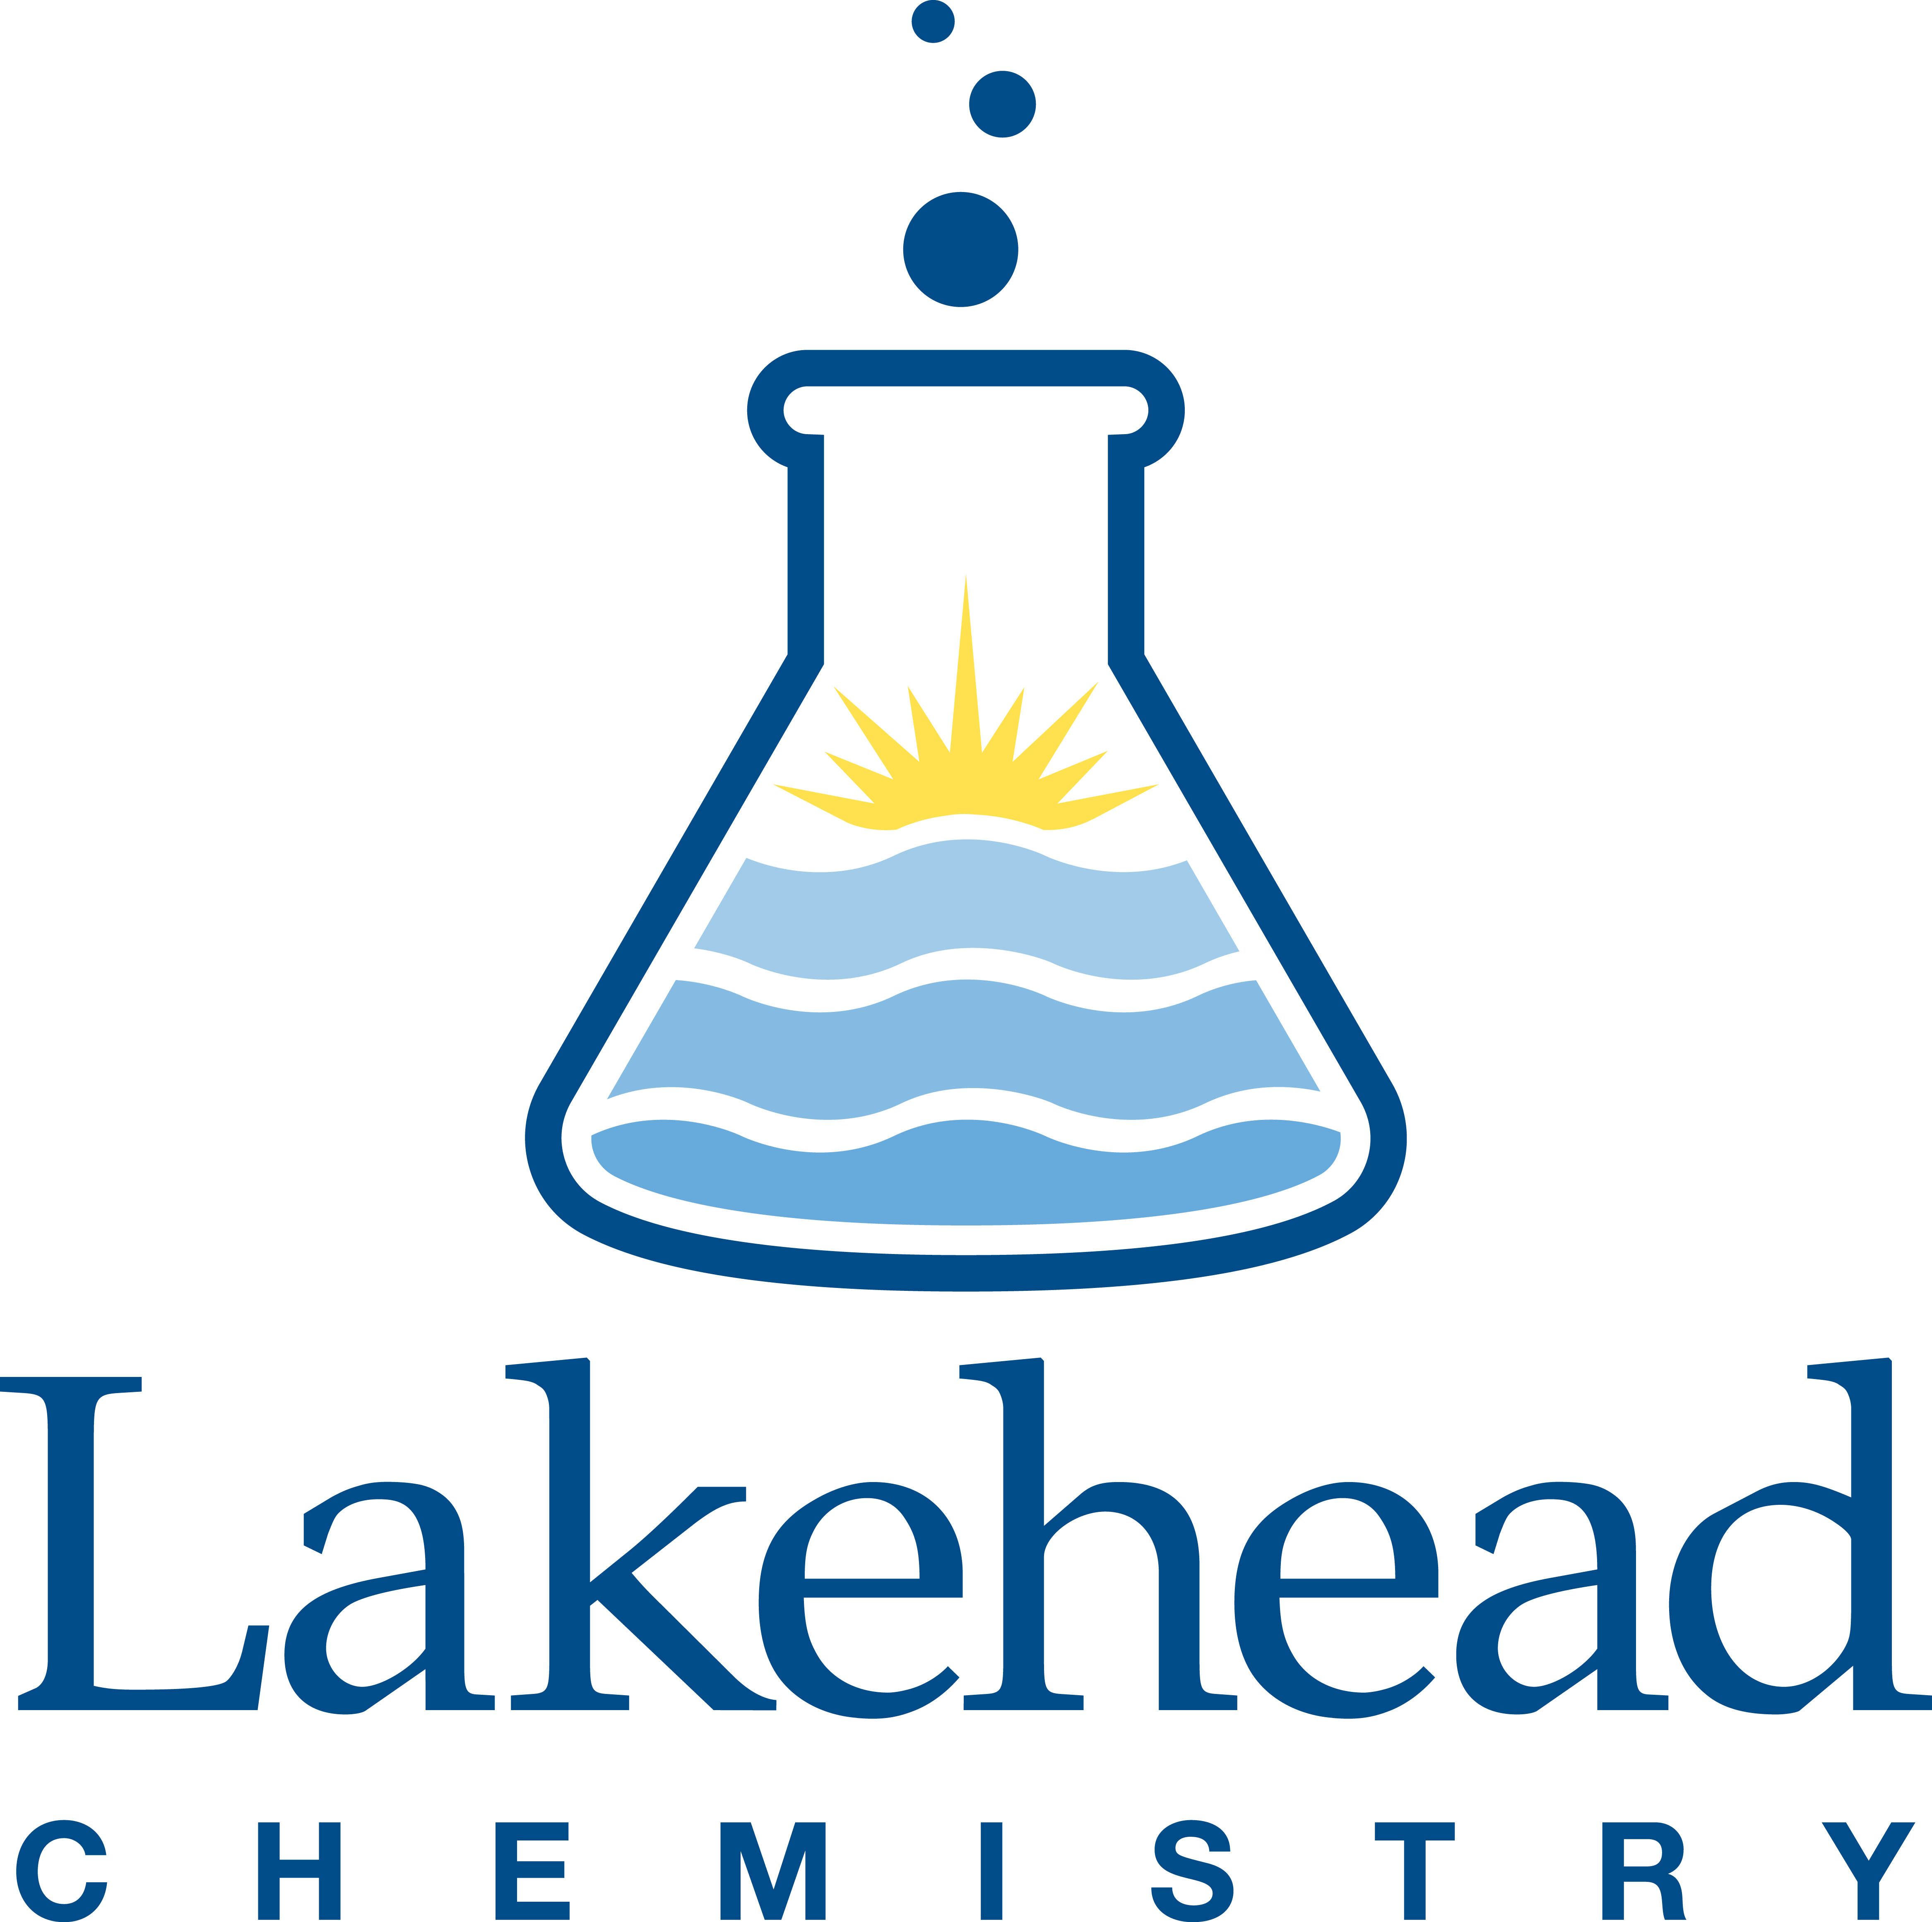 Department of Chemistry Logo - beaker with paddlers inside